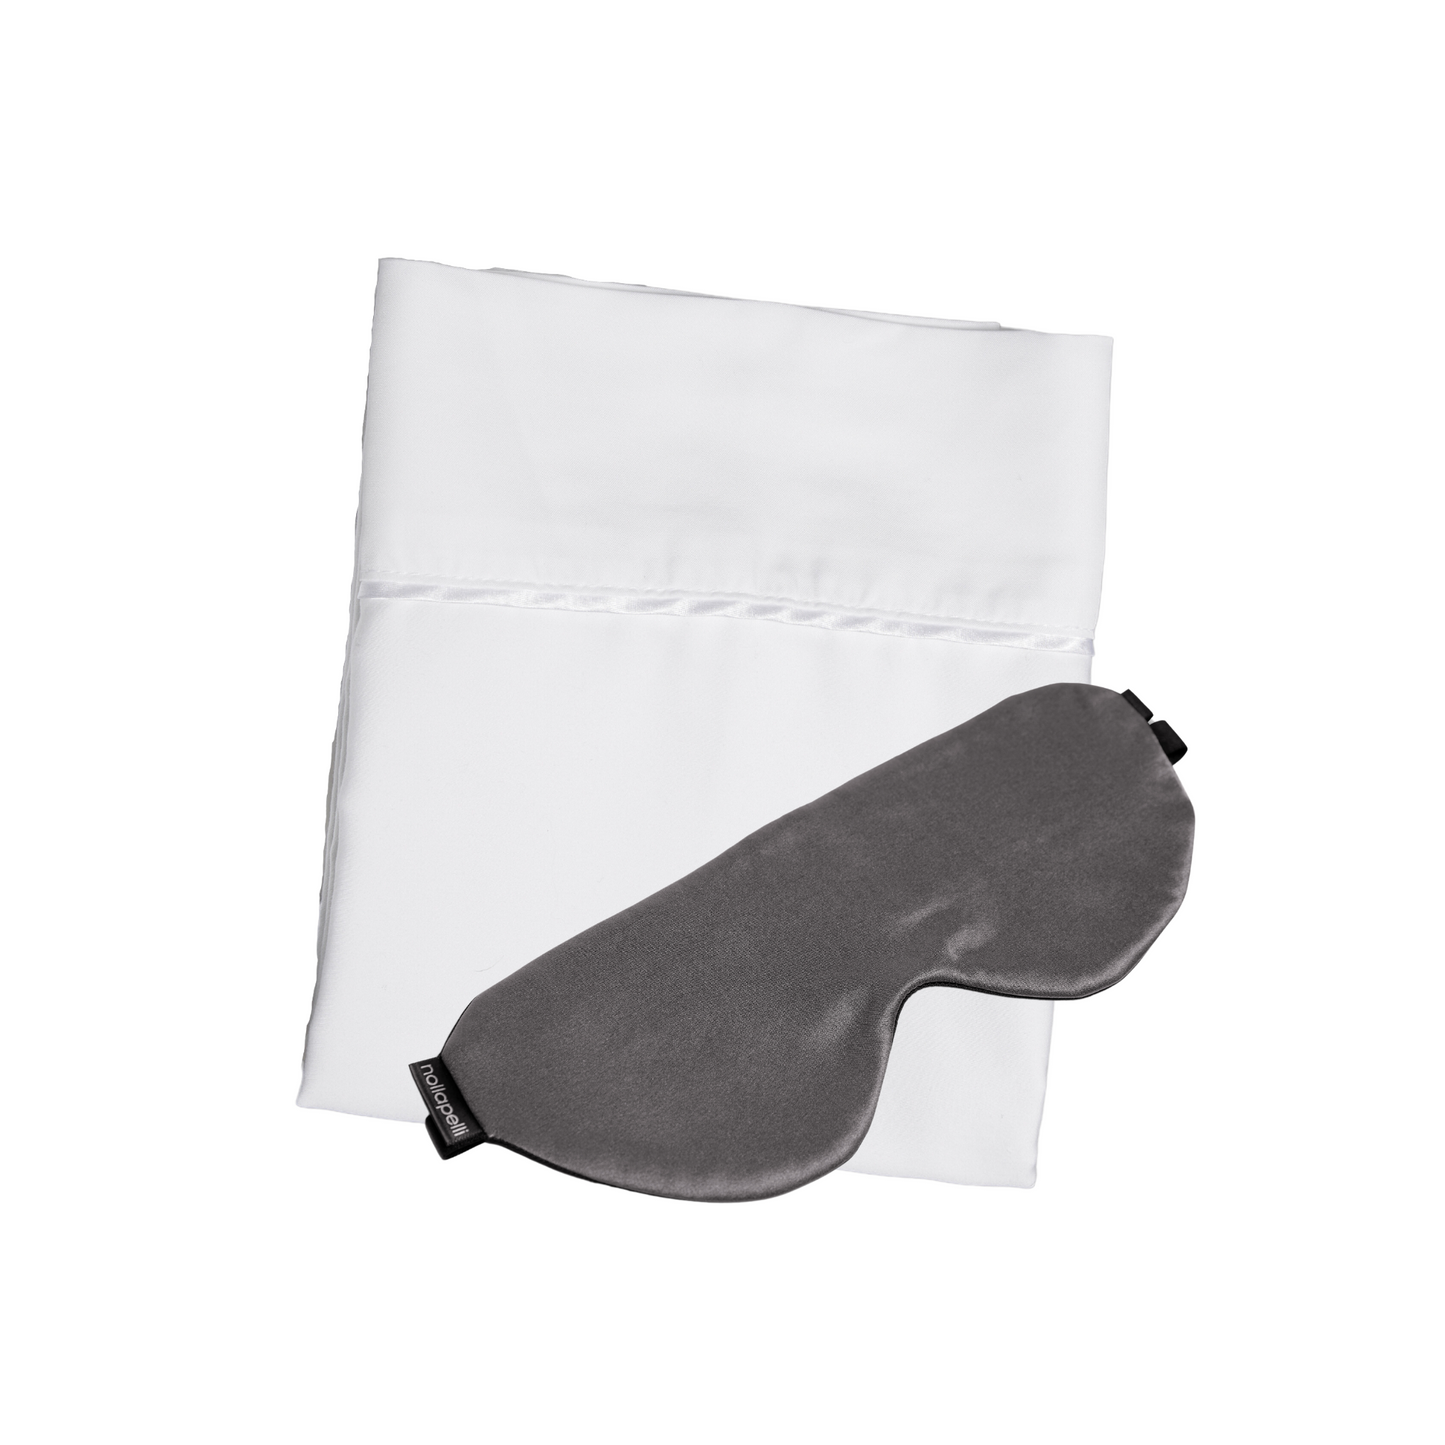 Restore Bundle includes 1 Beauty Pillowcase (queen) + 1 Restorative Eye Mask